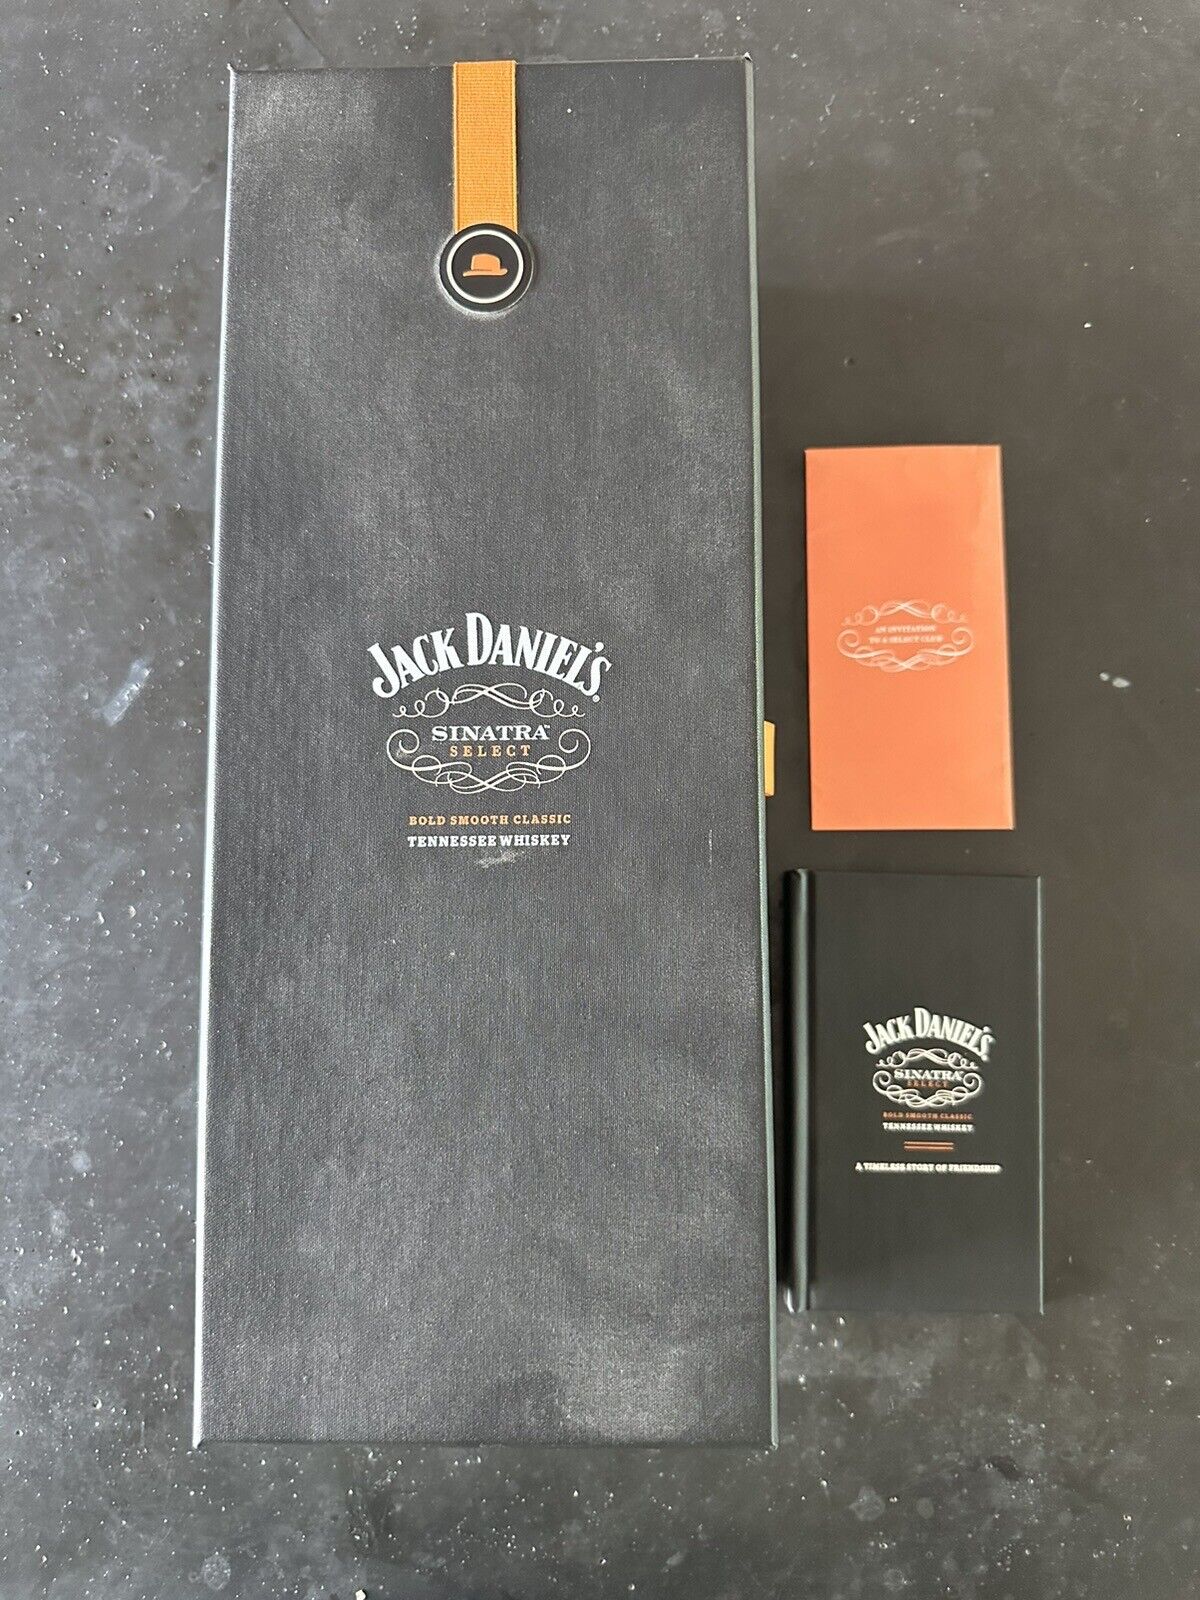 Jack Daniels Frank Sinatra  Original Box, Limited,  No Bottle Included